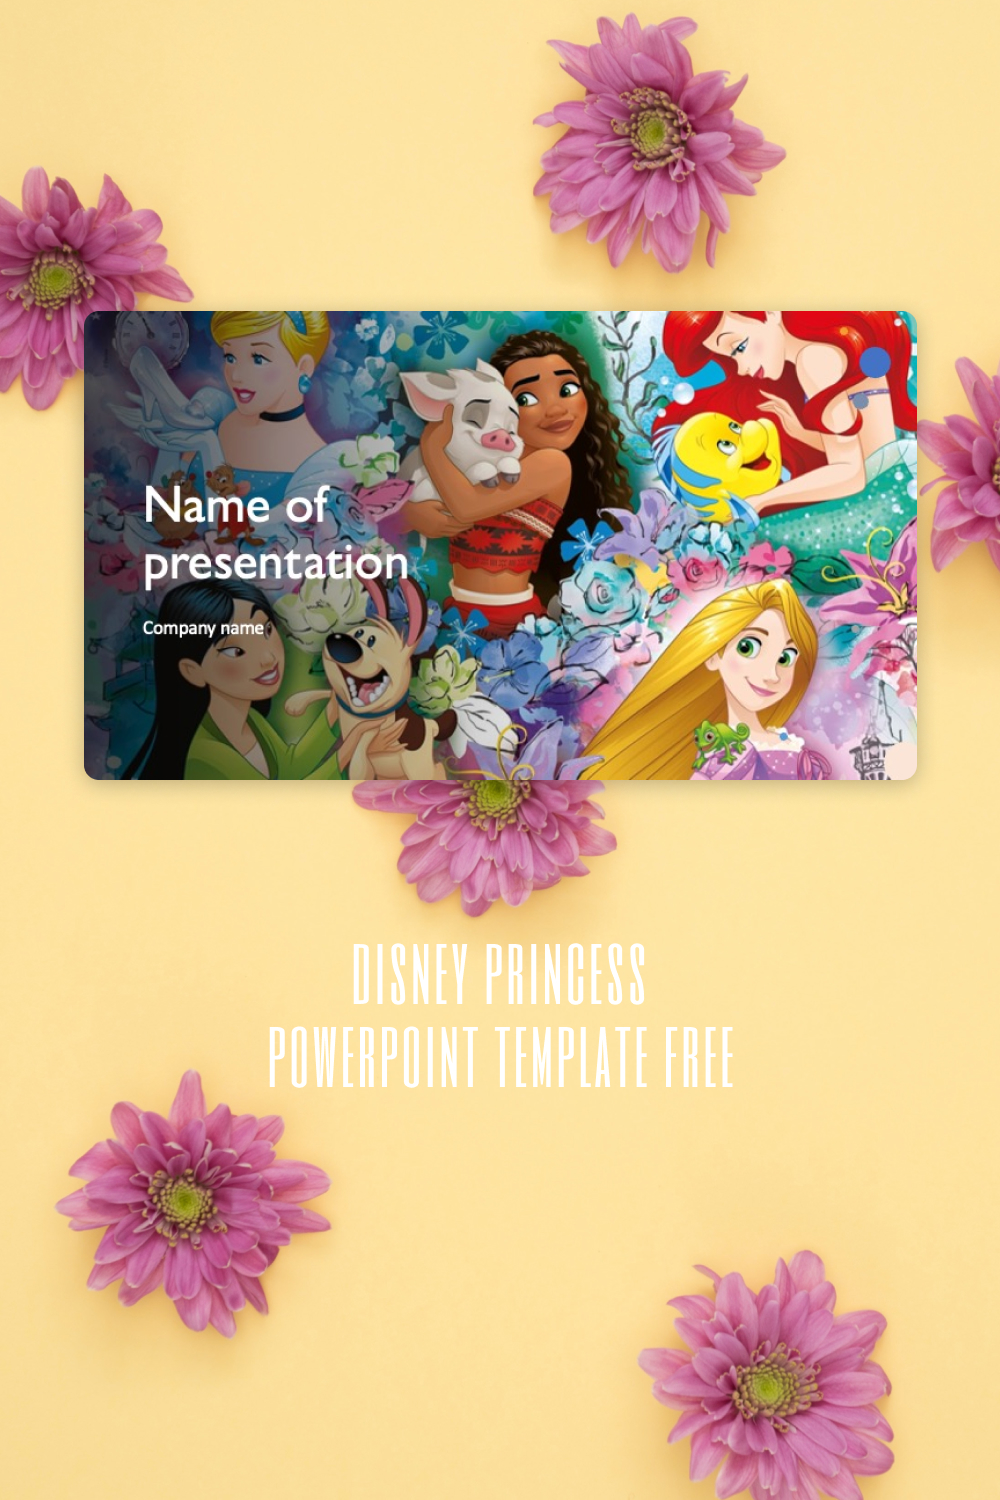 Disney princess powerpoint template free of pinterest.